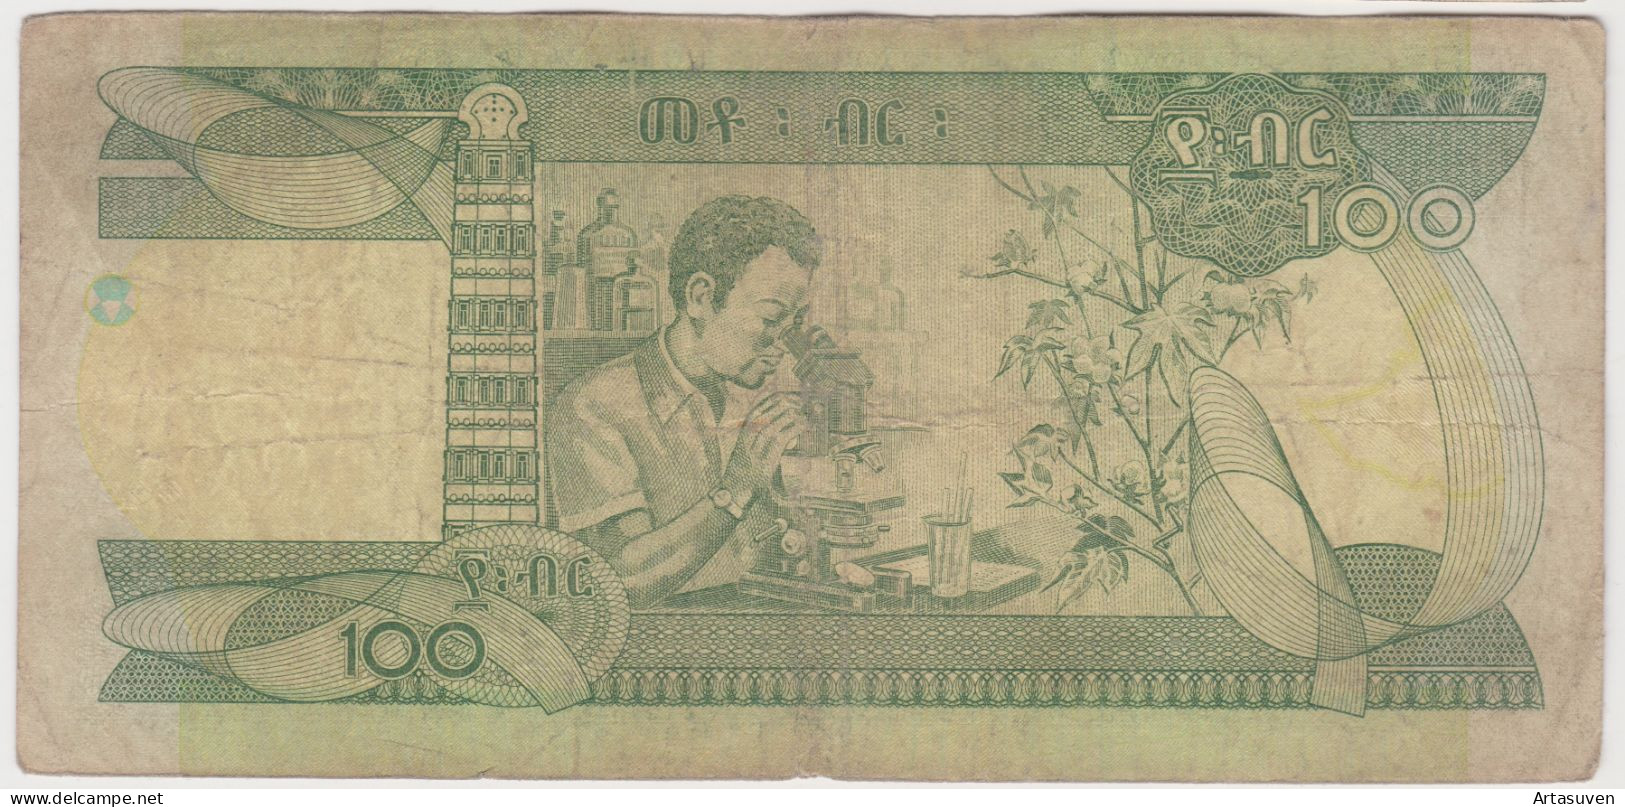 Ethiopia 100 Birr 2007-2015 PICK-52 F / VG Africa Paper Money, Banknote - Ethiopia